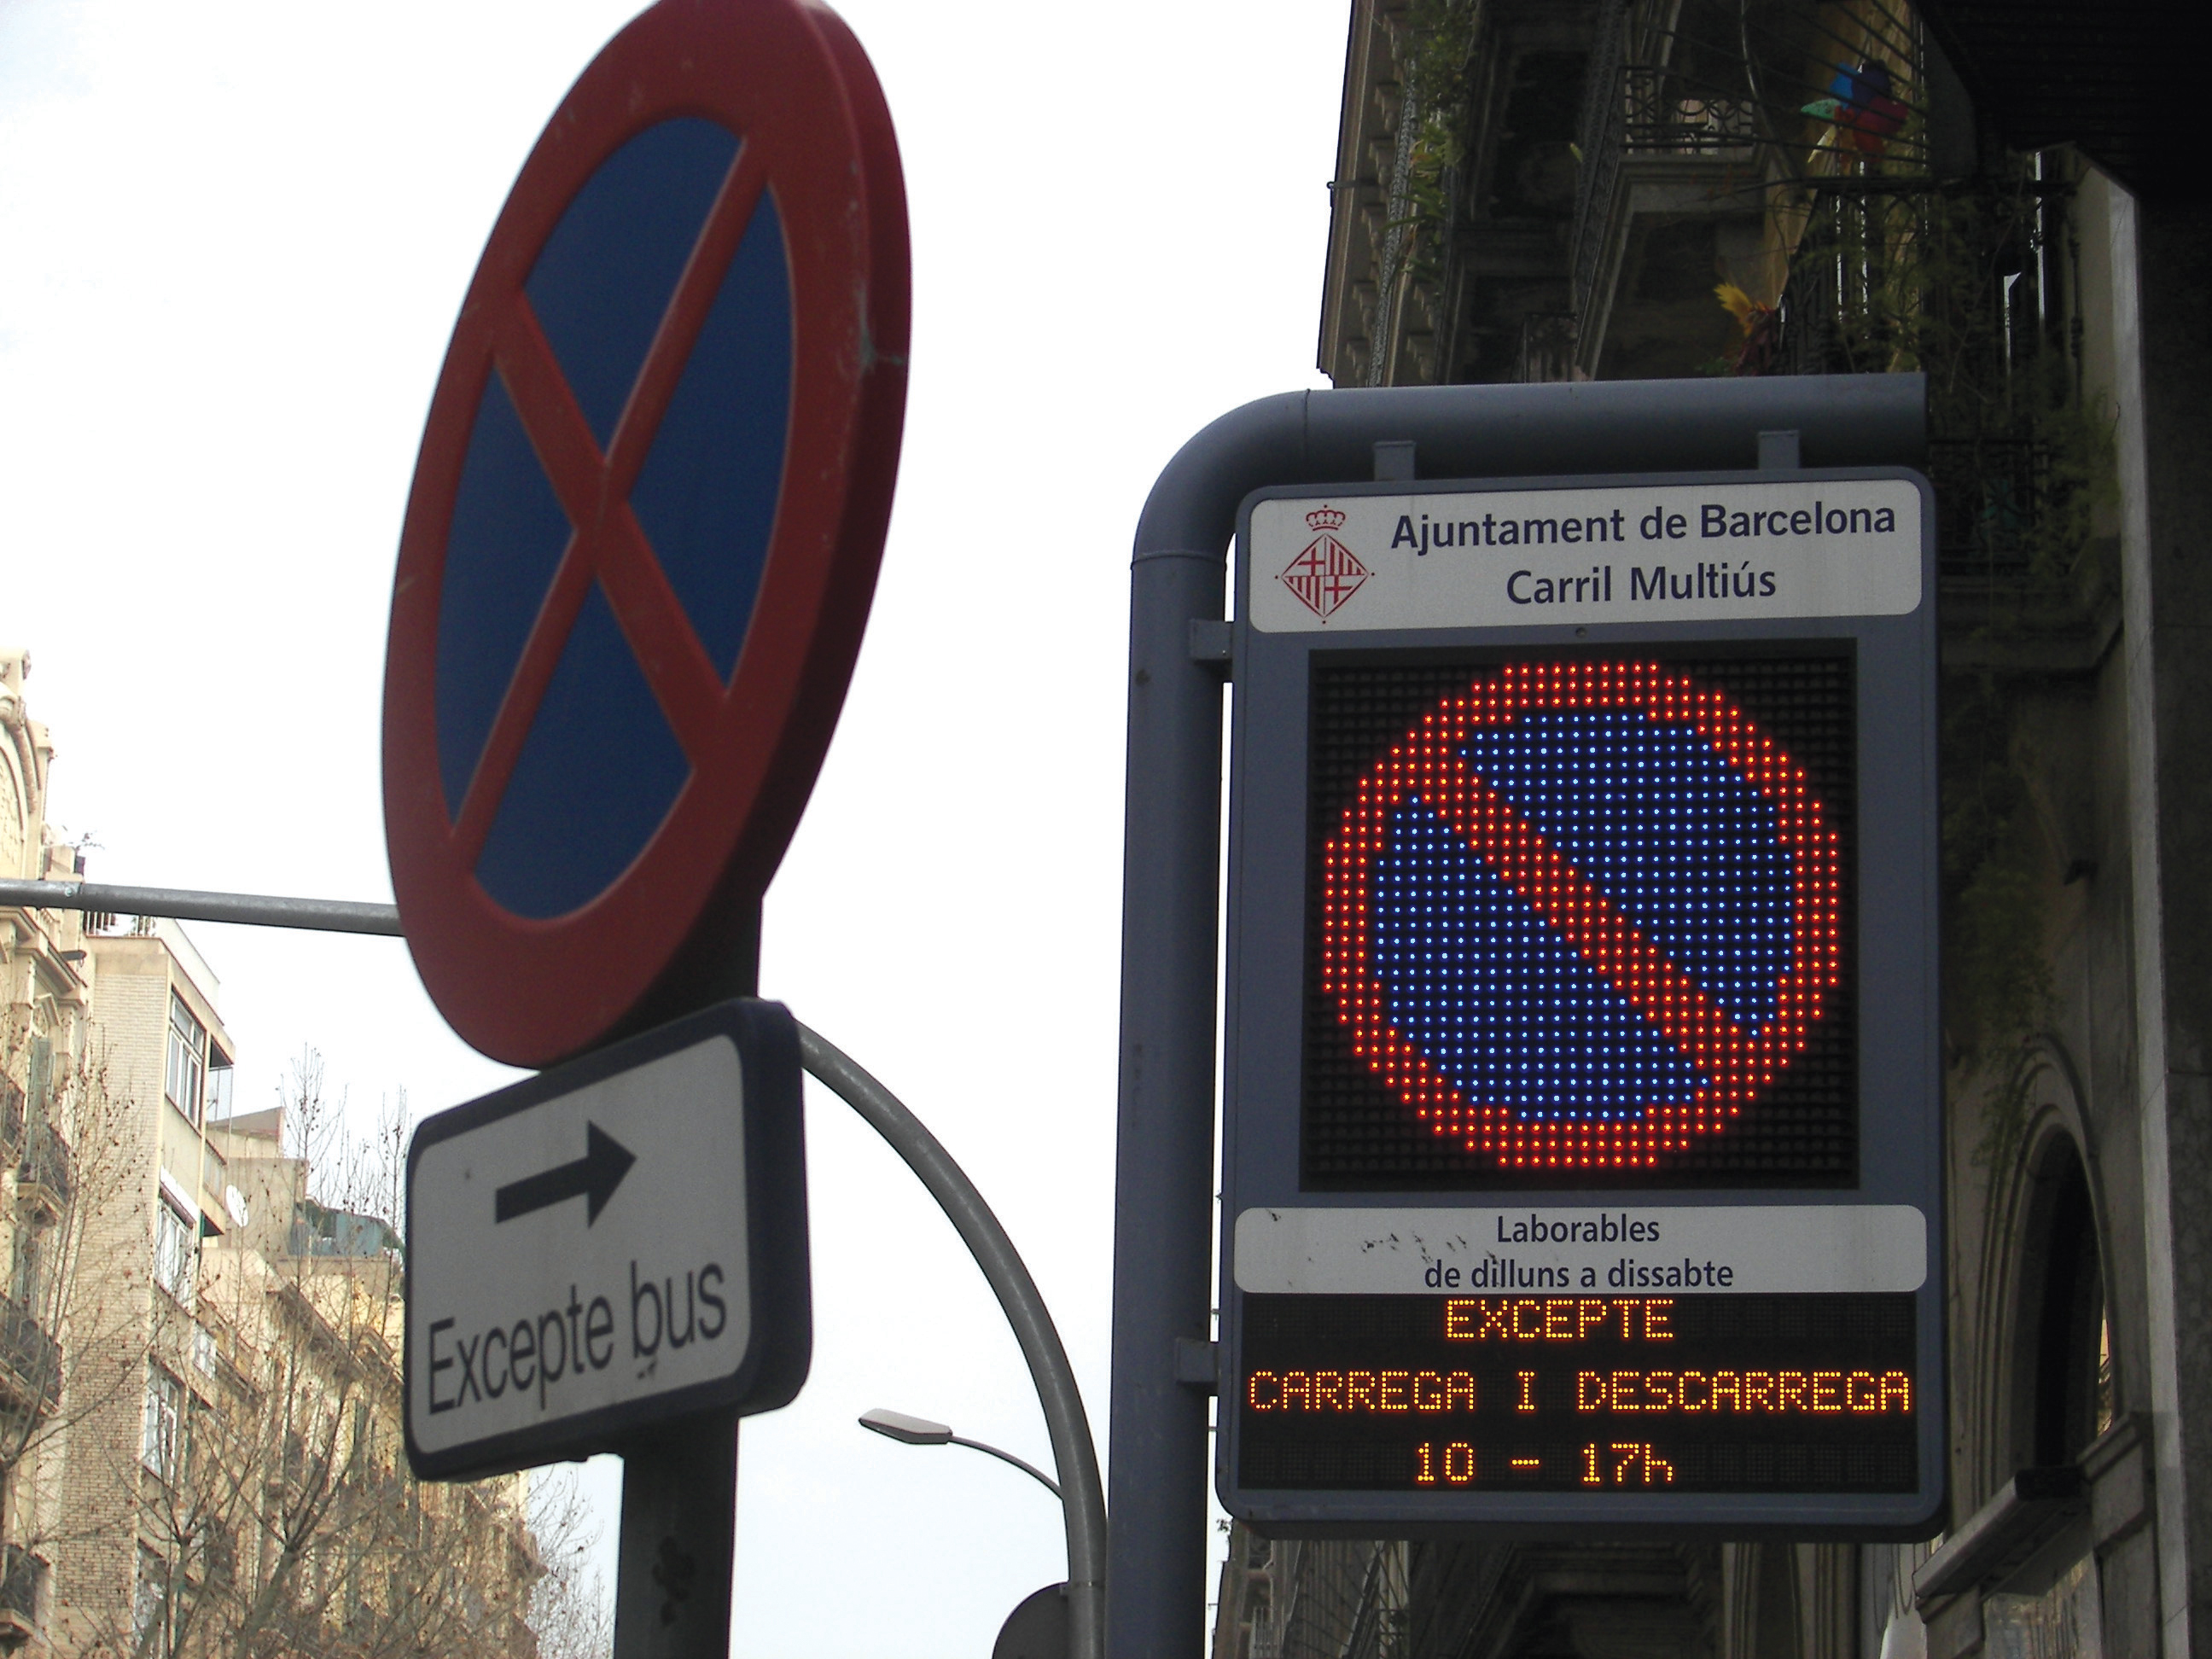 Spanish road signs